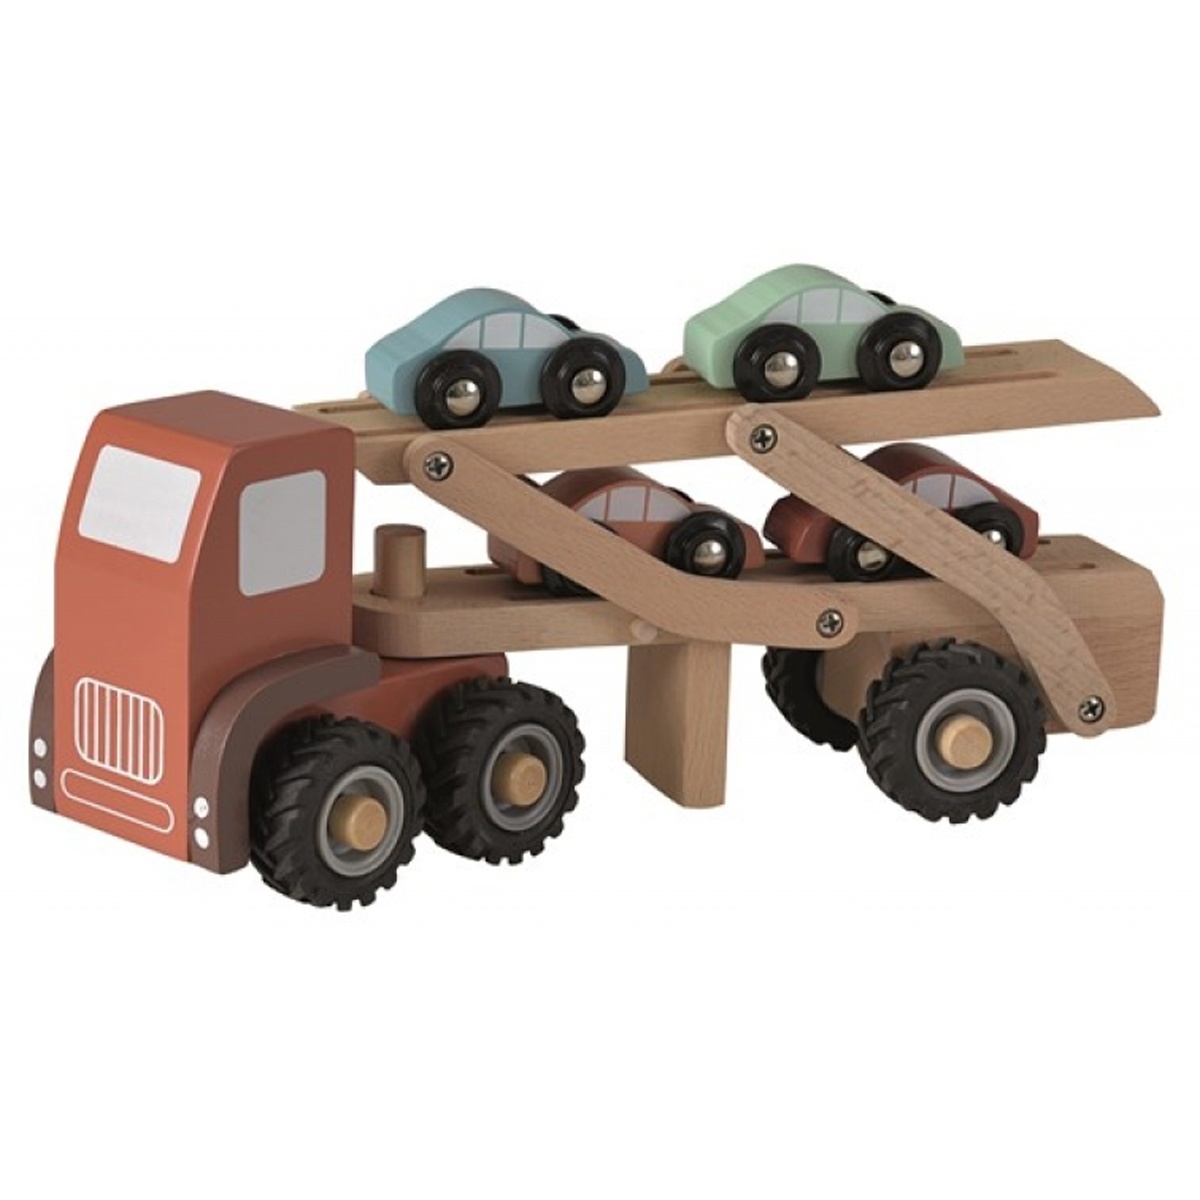 Egmont toys Transporter Truck mit 4 Autos aus Holz